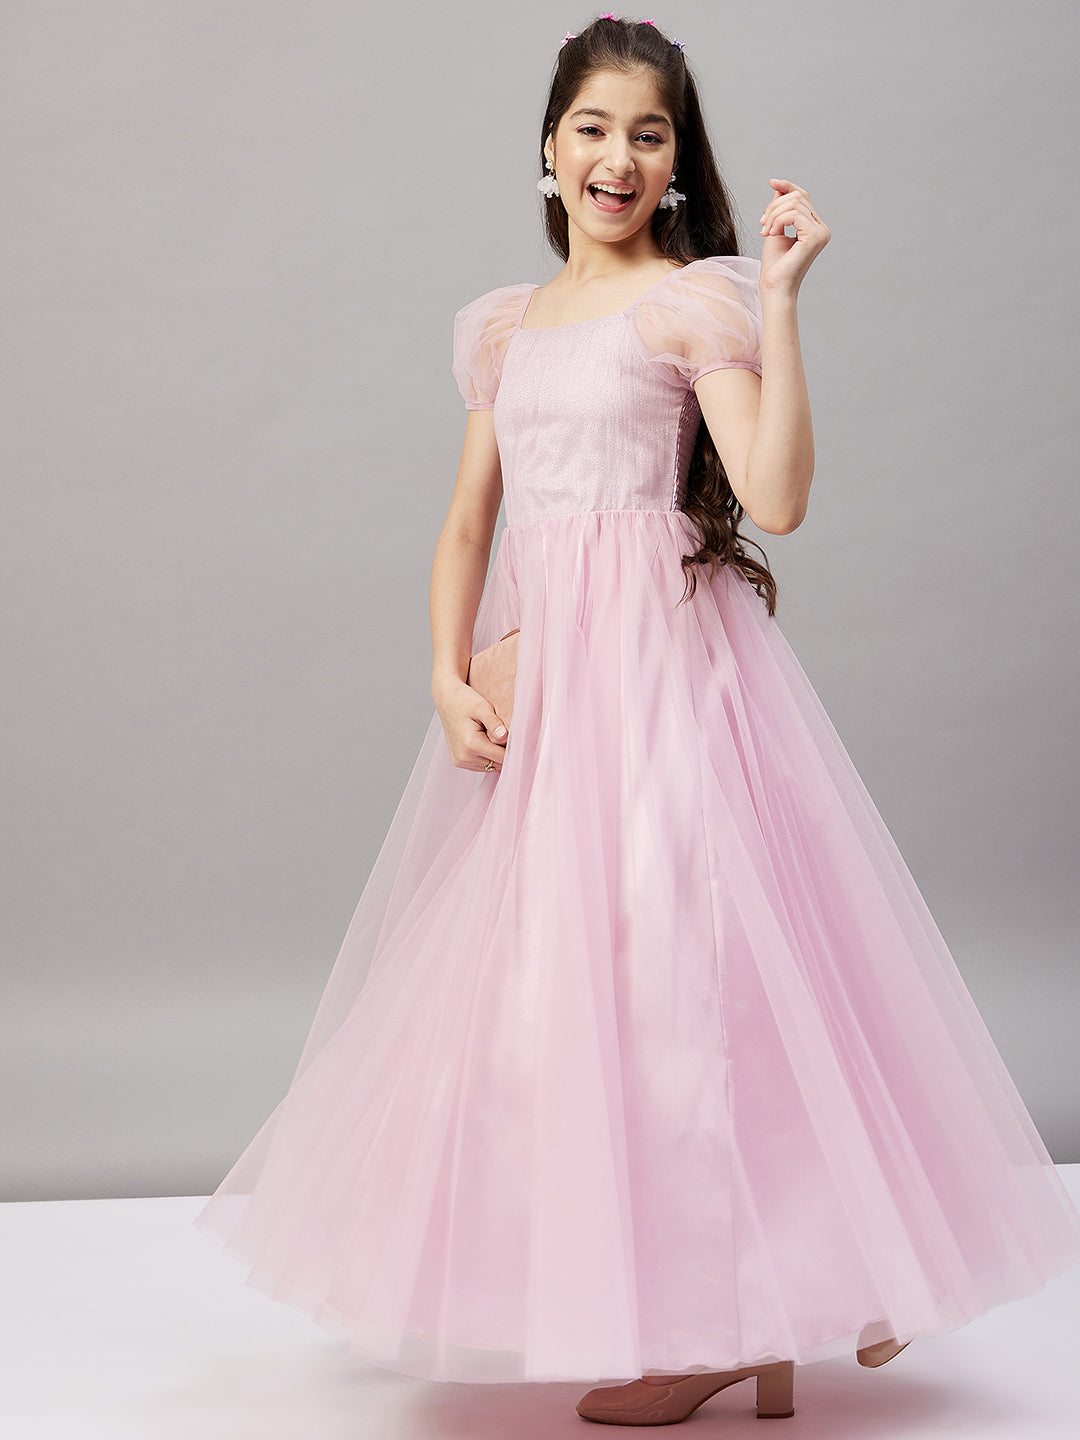 Girl's Solid Dress Pink - StyloBug KIDS